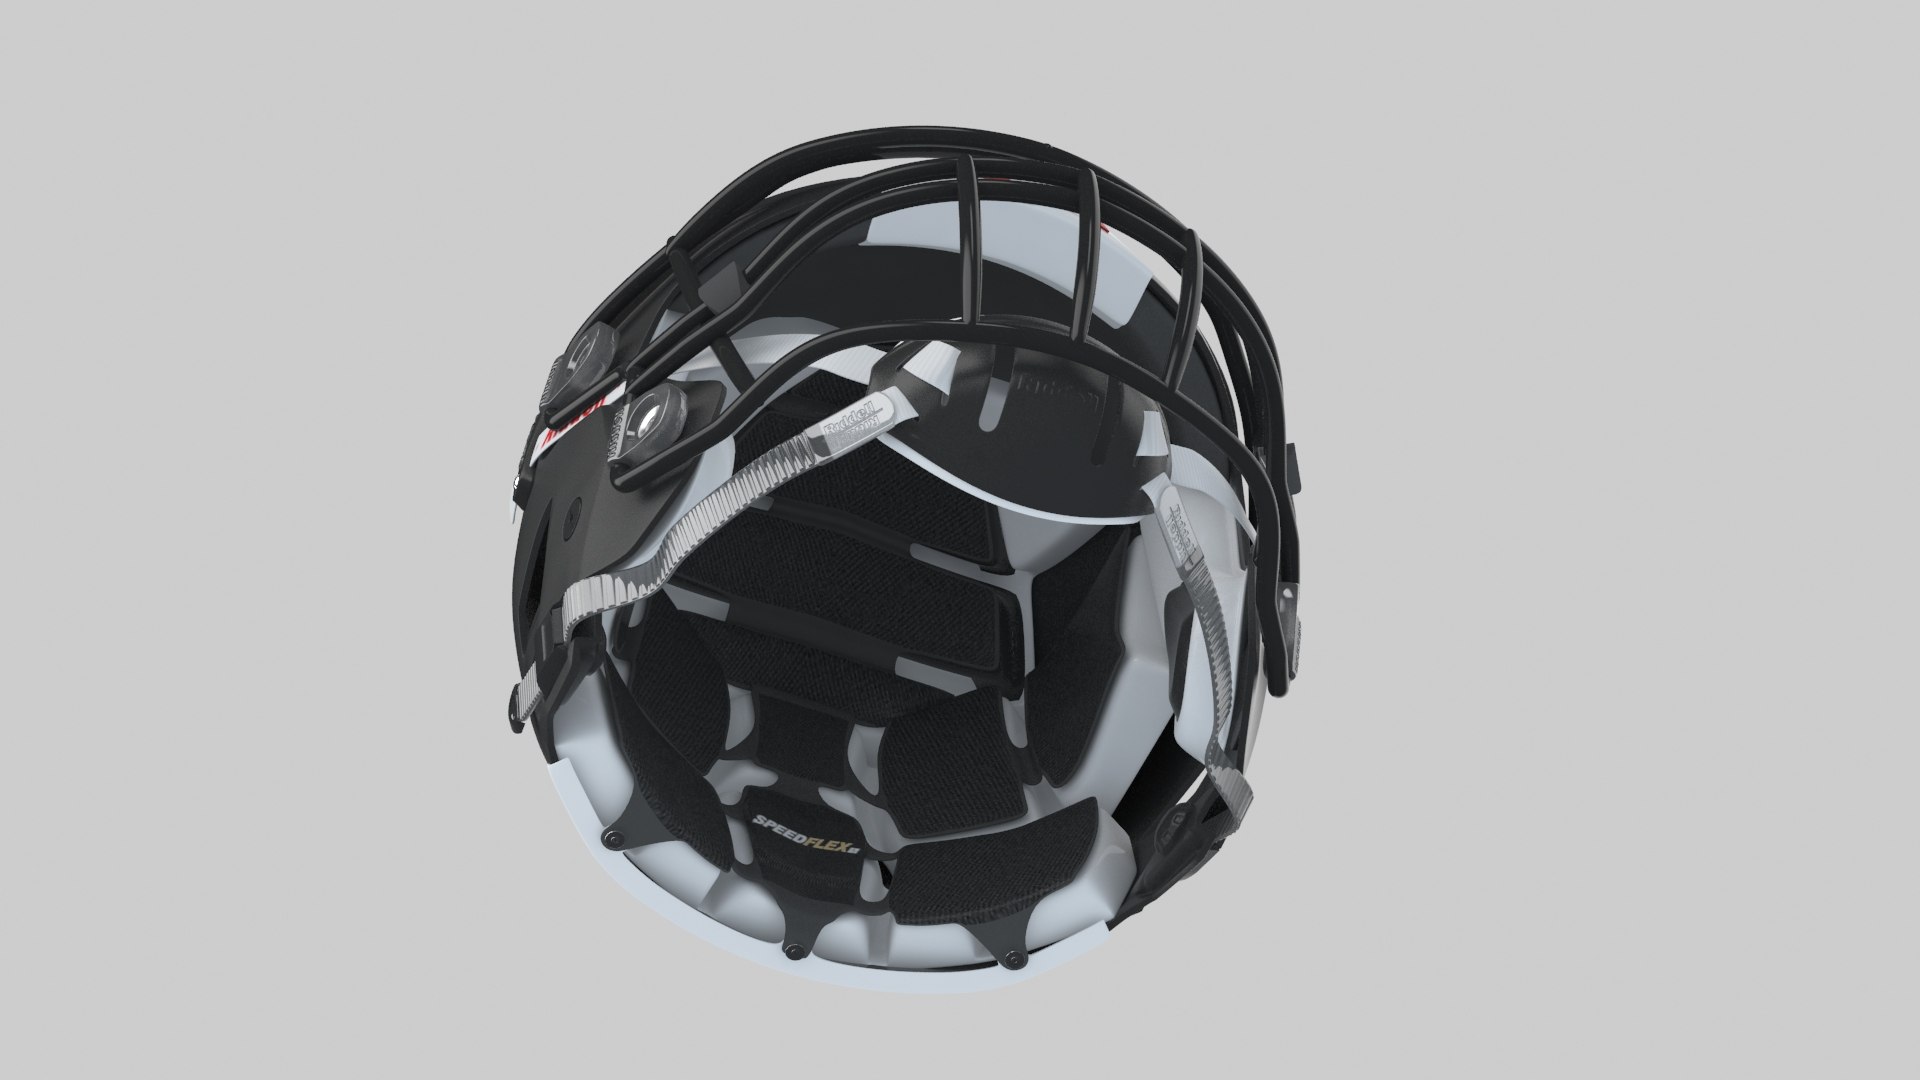 3D riddell speedflex black helmets model - TurboSquid 1497025